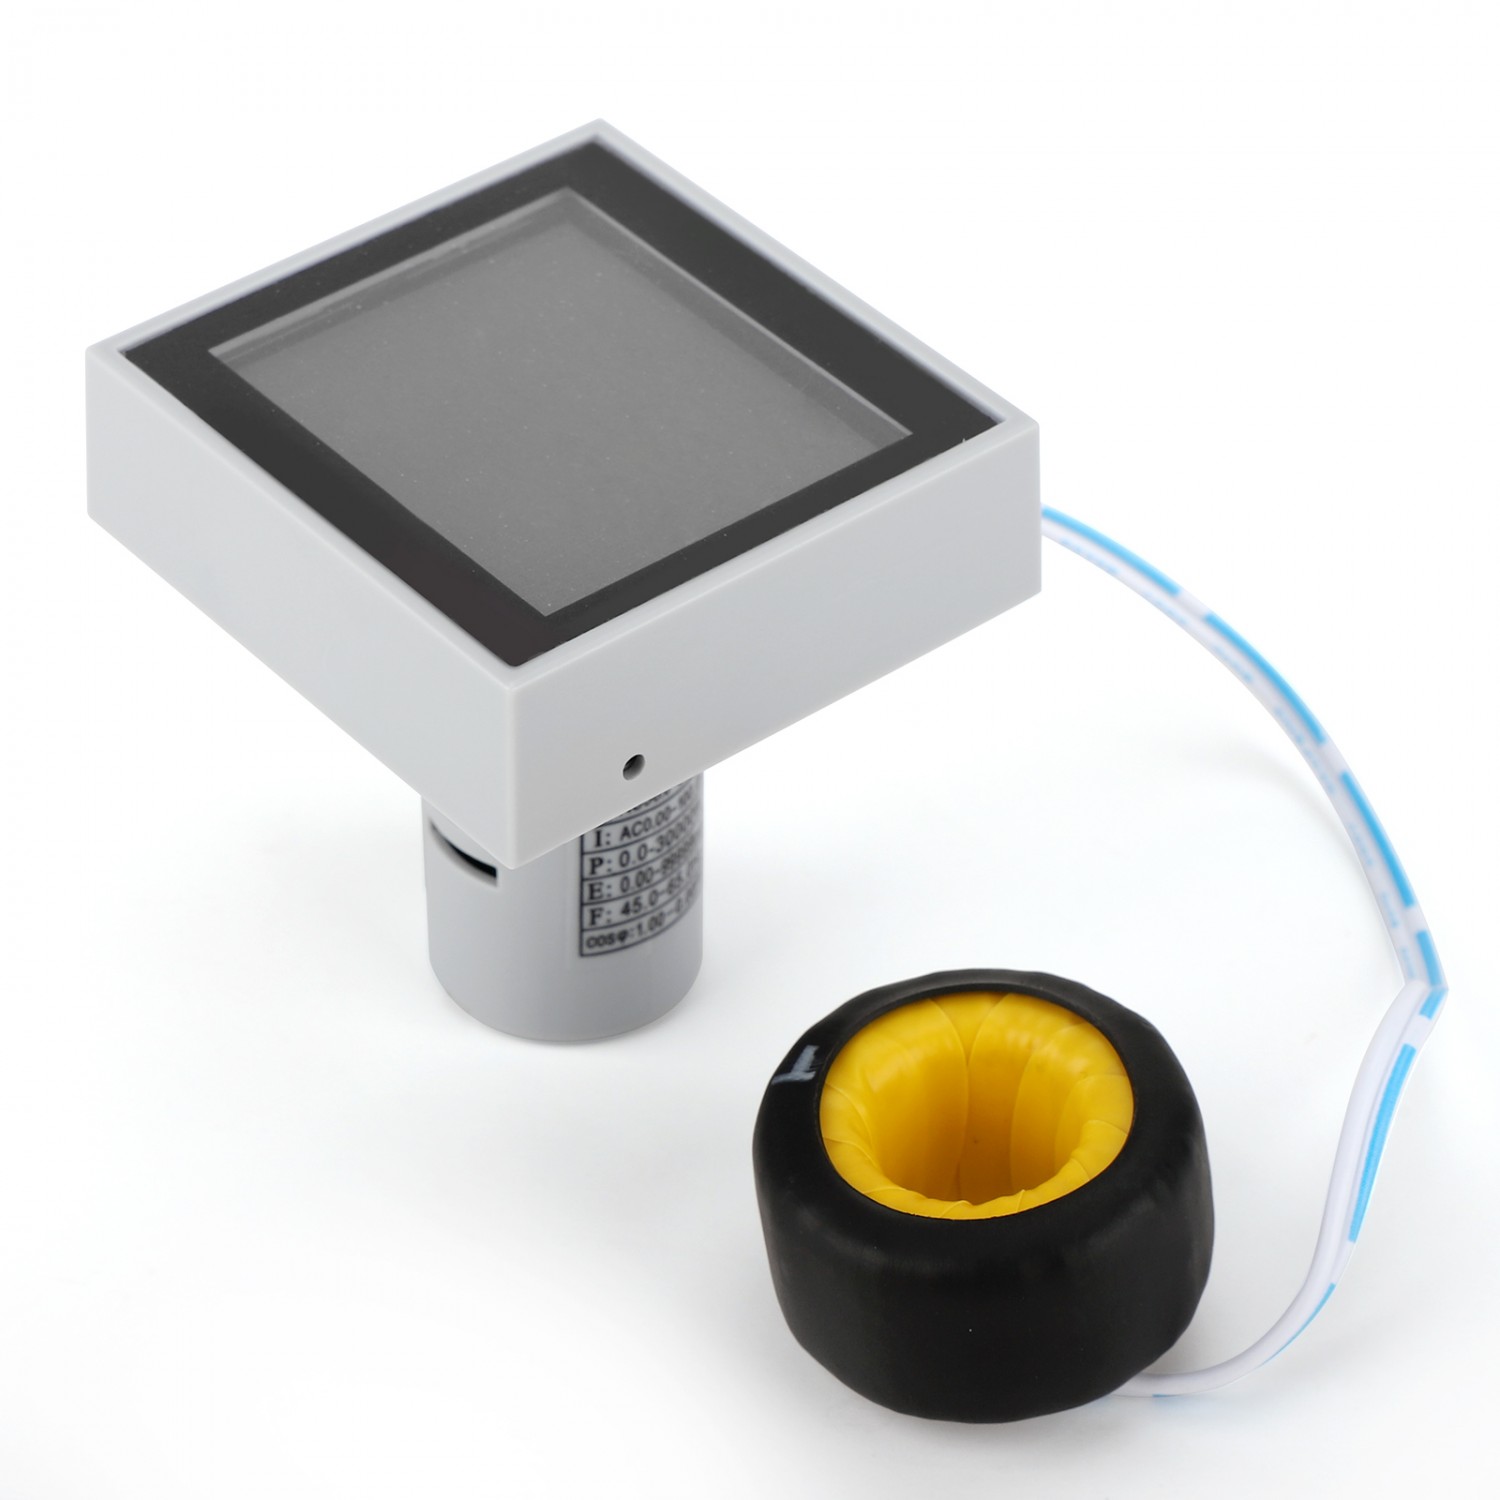 22mm Round Small Mini LED Light Display Thermometer Digital Temperature  Meter Indicator AC 50-380V 220V -20-120'C with 1m Sensor